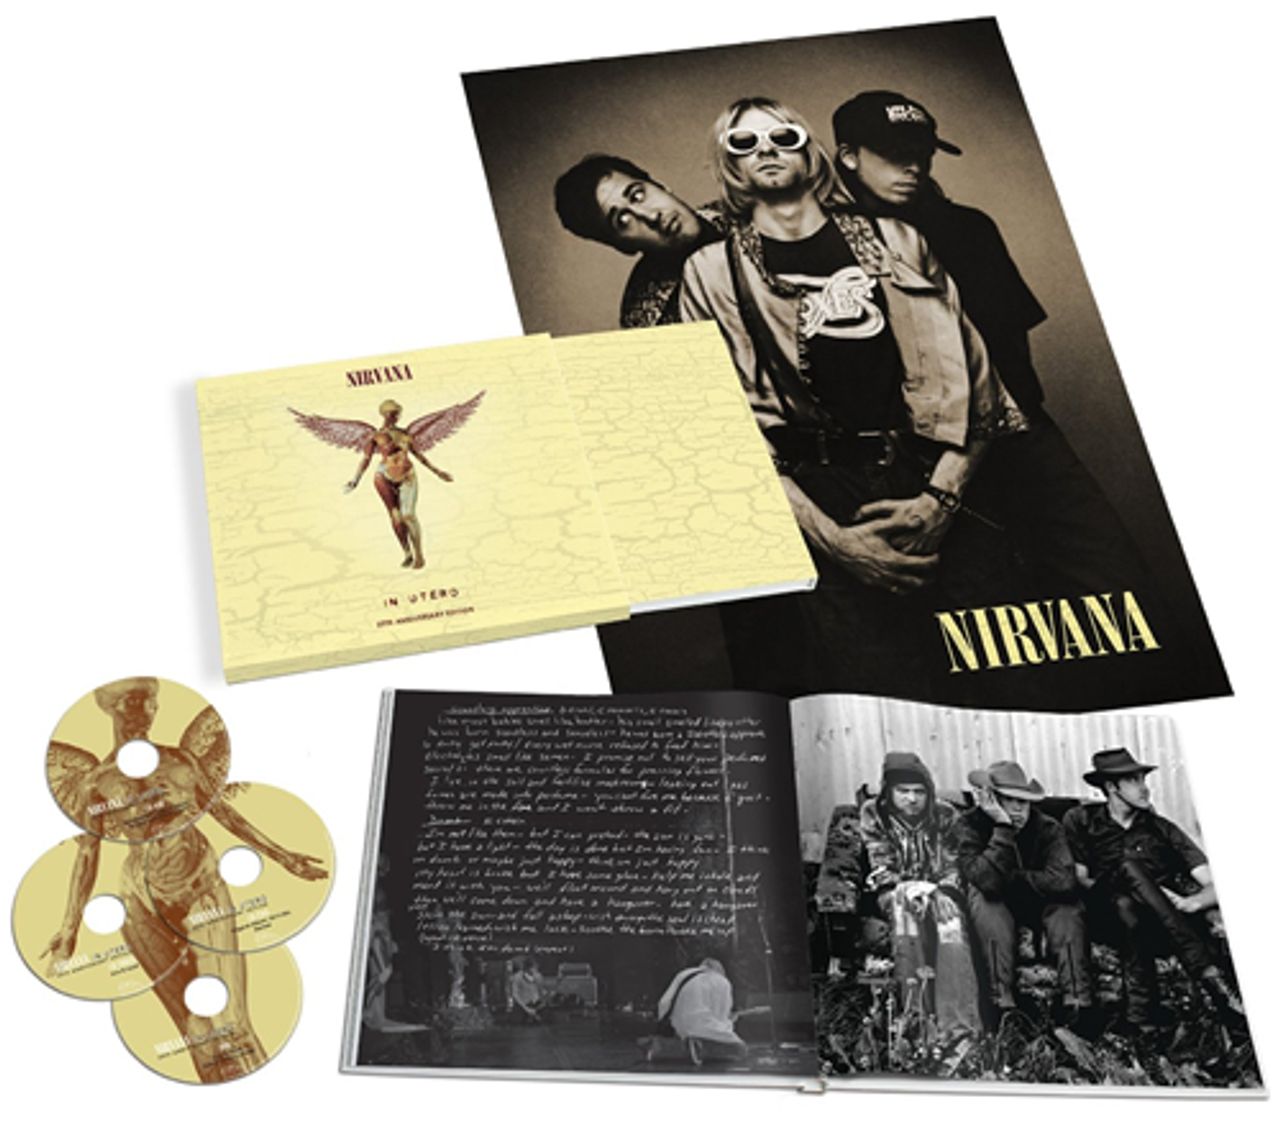 nirvana cd collection